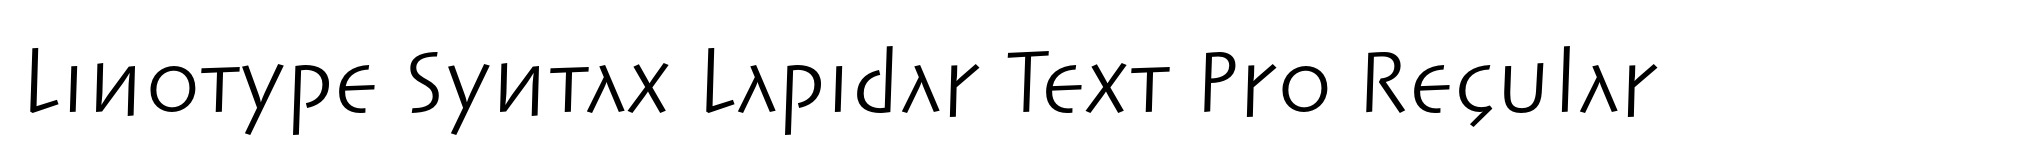 Linotype Syntax Lapidar Text Pro Regular image